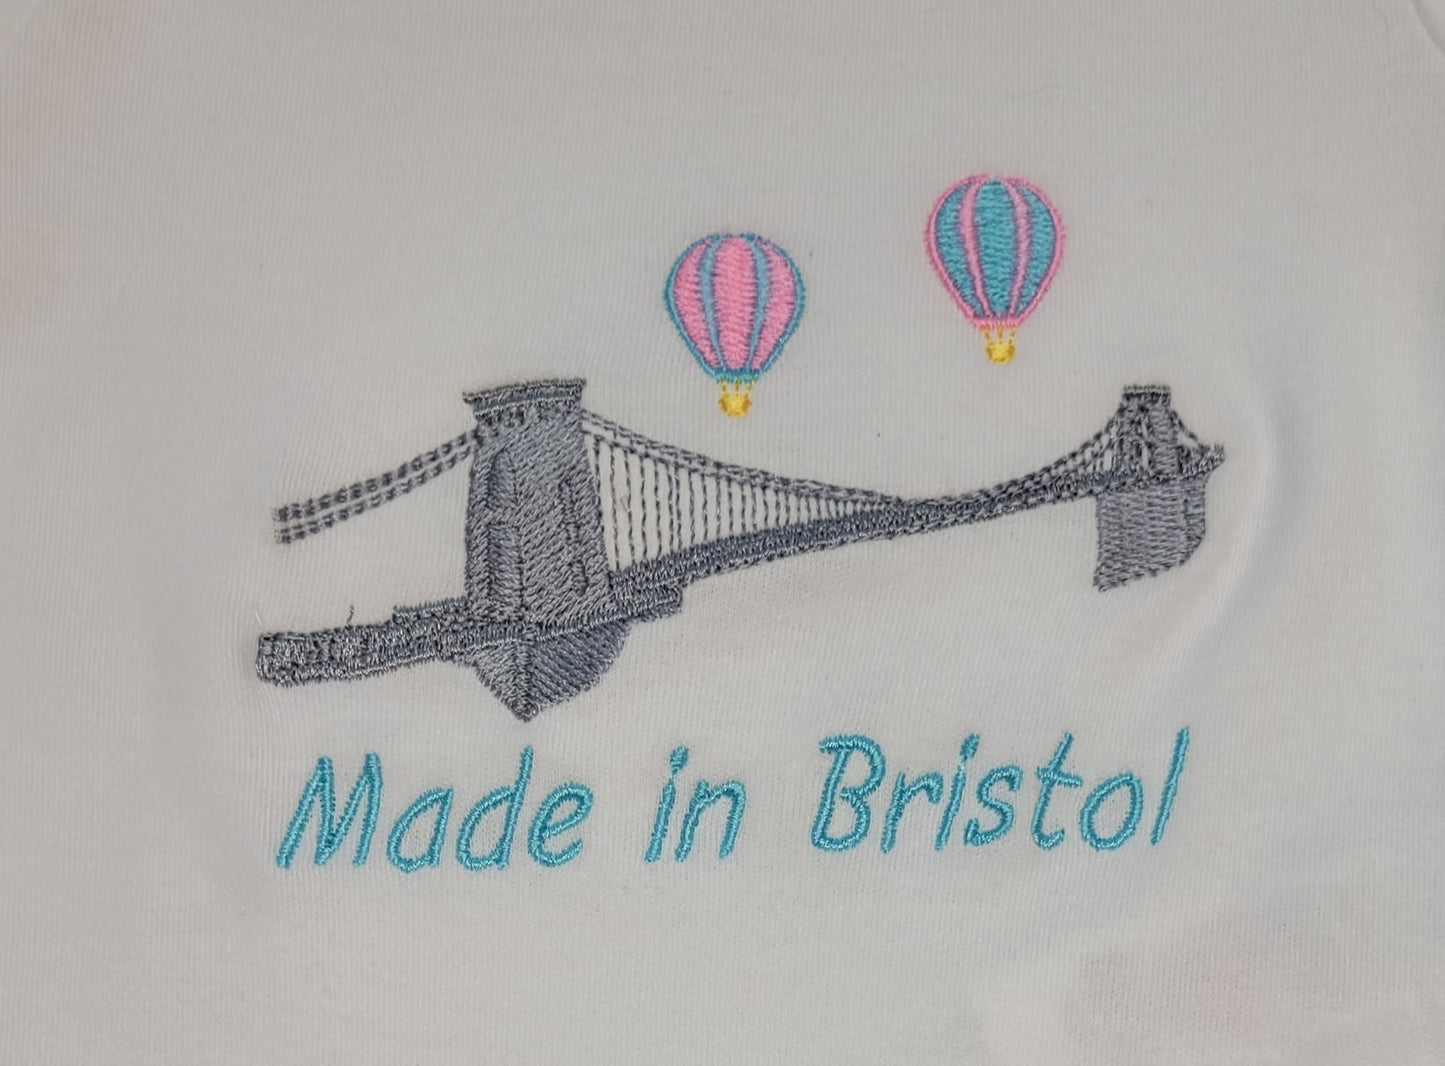 Baby Vest Made In Bristol